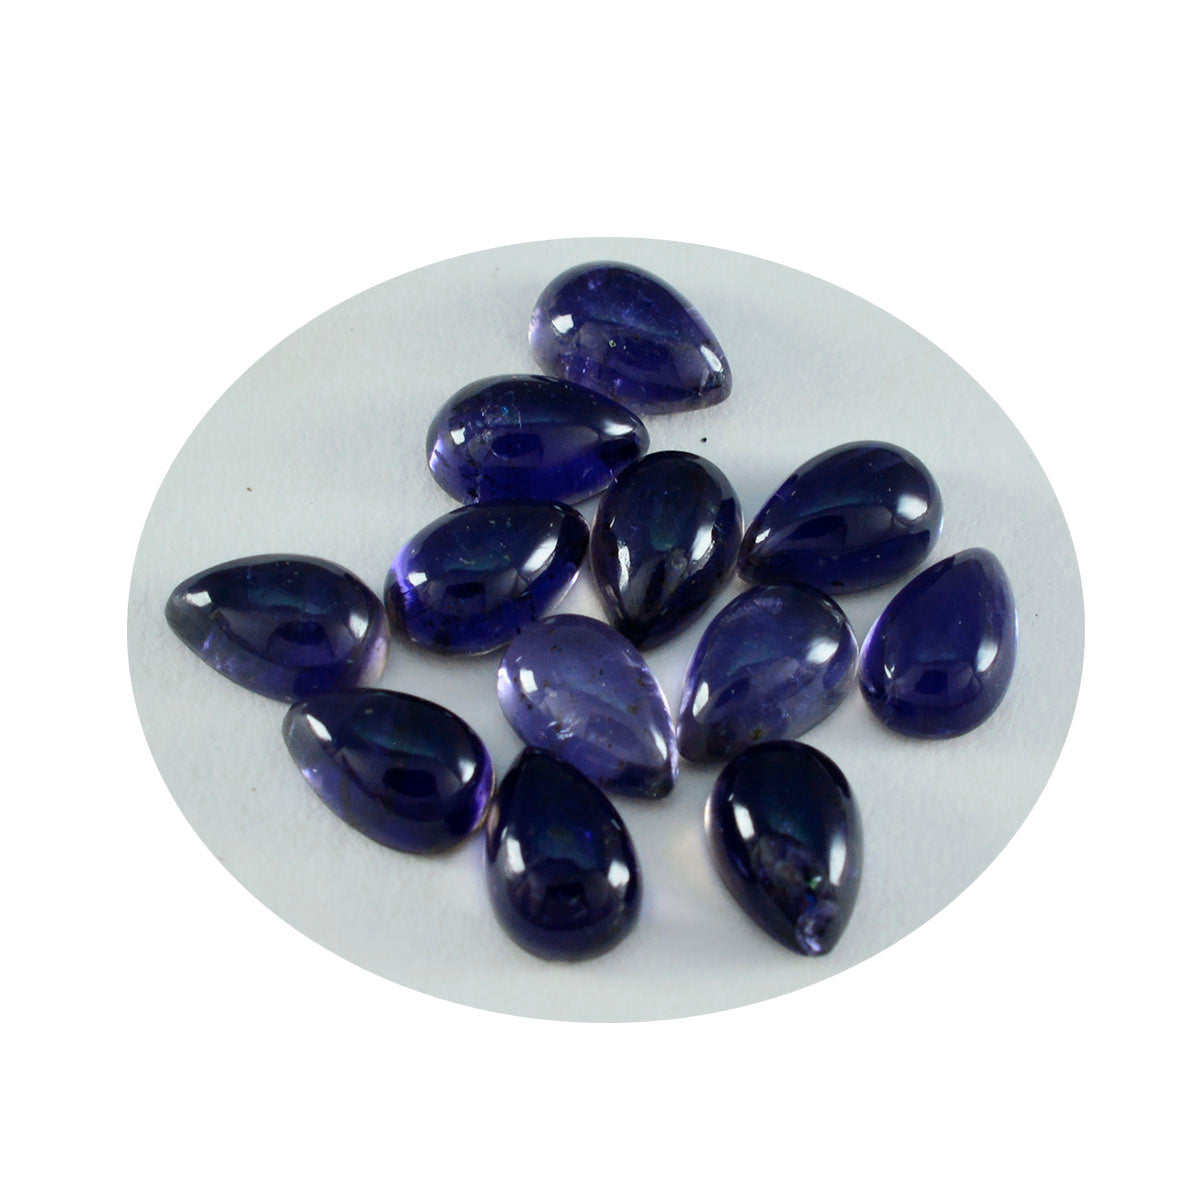 Riyogems 1PC Blue Iolite Cabochon 4x6 mm Pear Shape startling Quality Gems